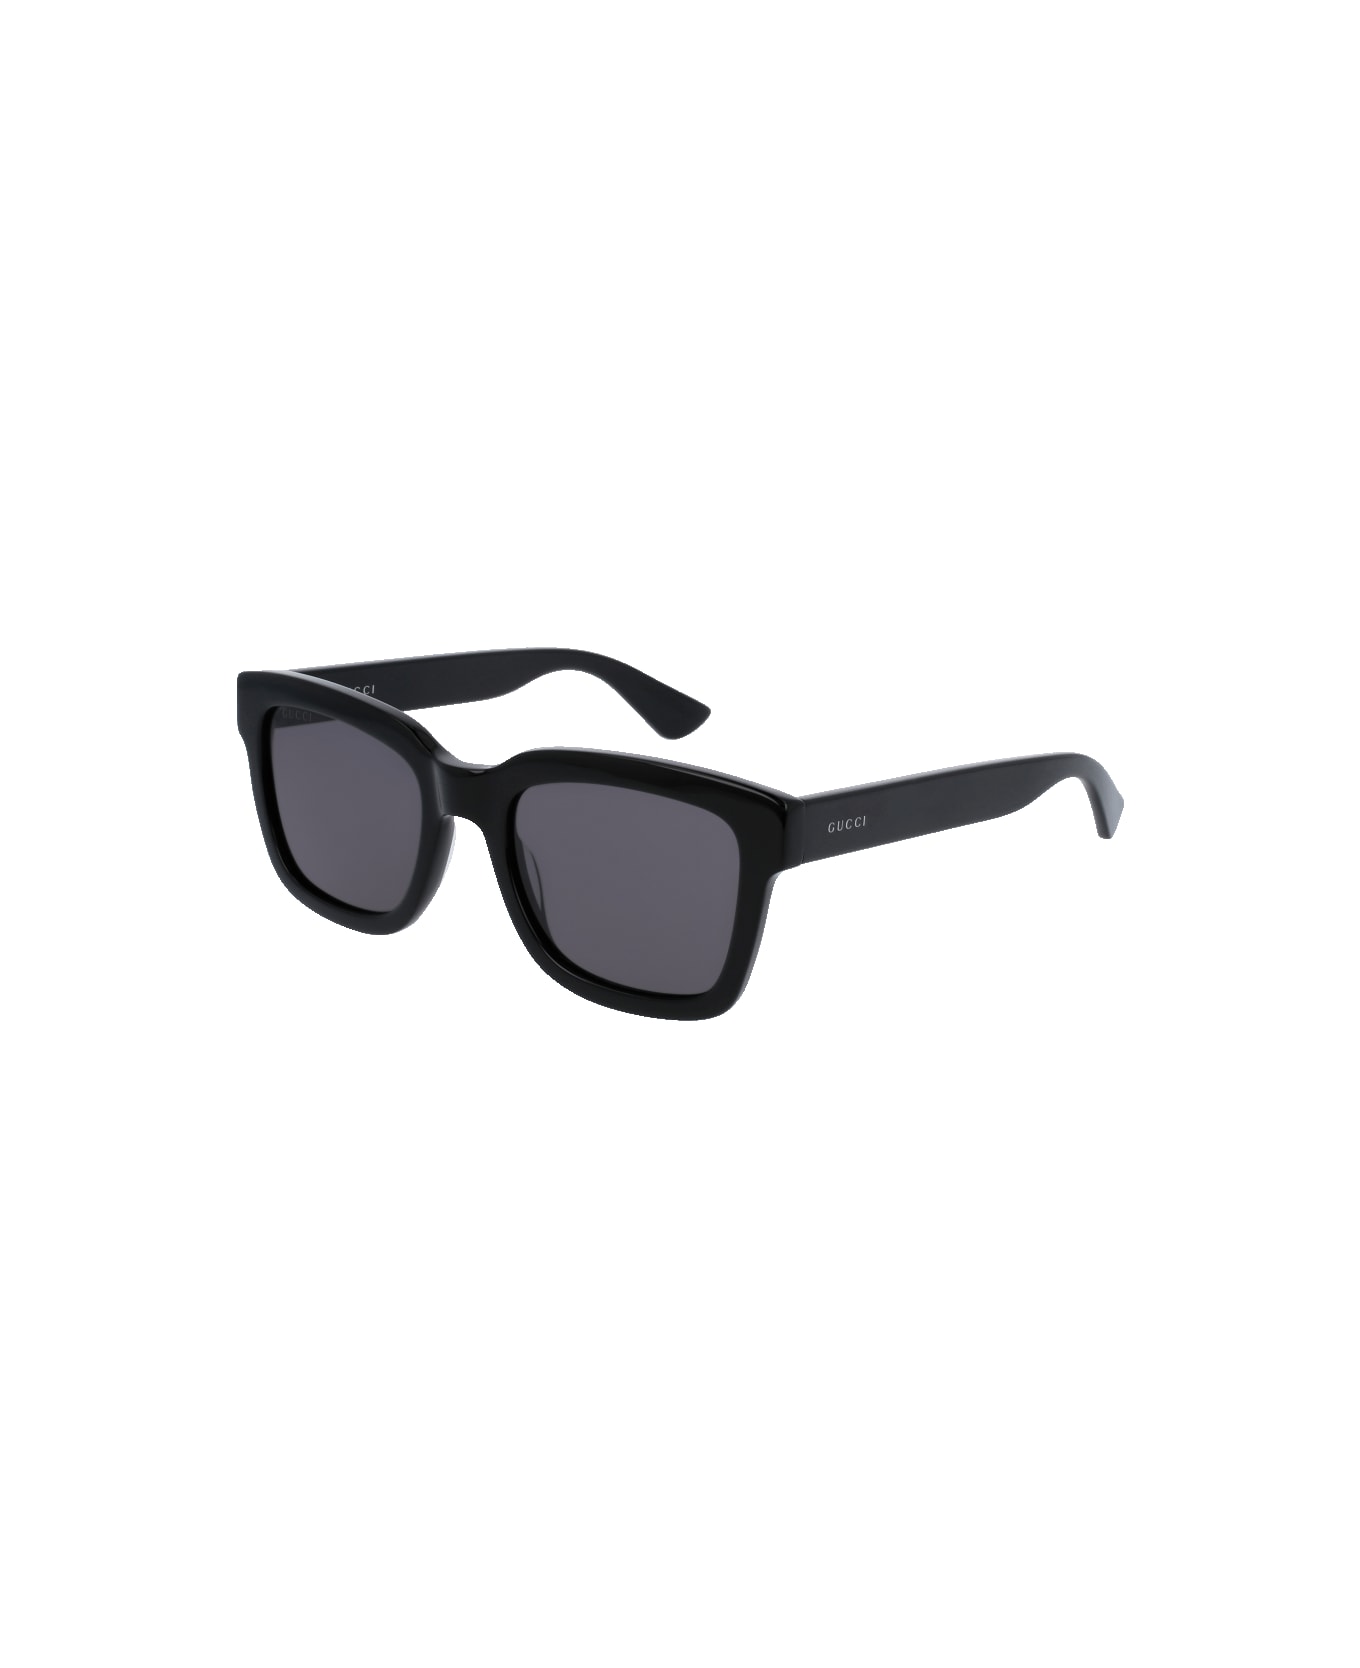 Gucci Eyewear GG0001SN 001 Sunglasses - Black